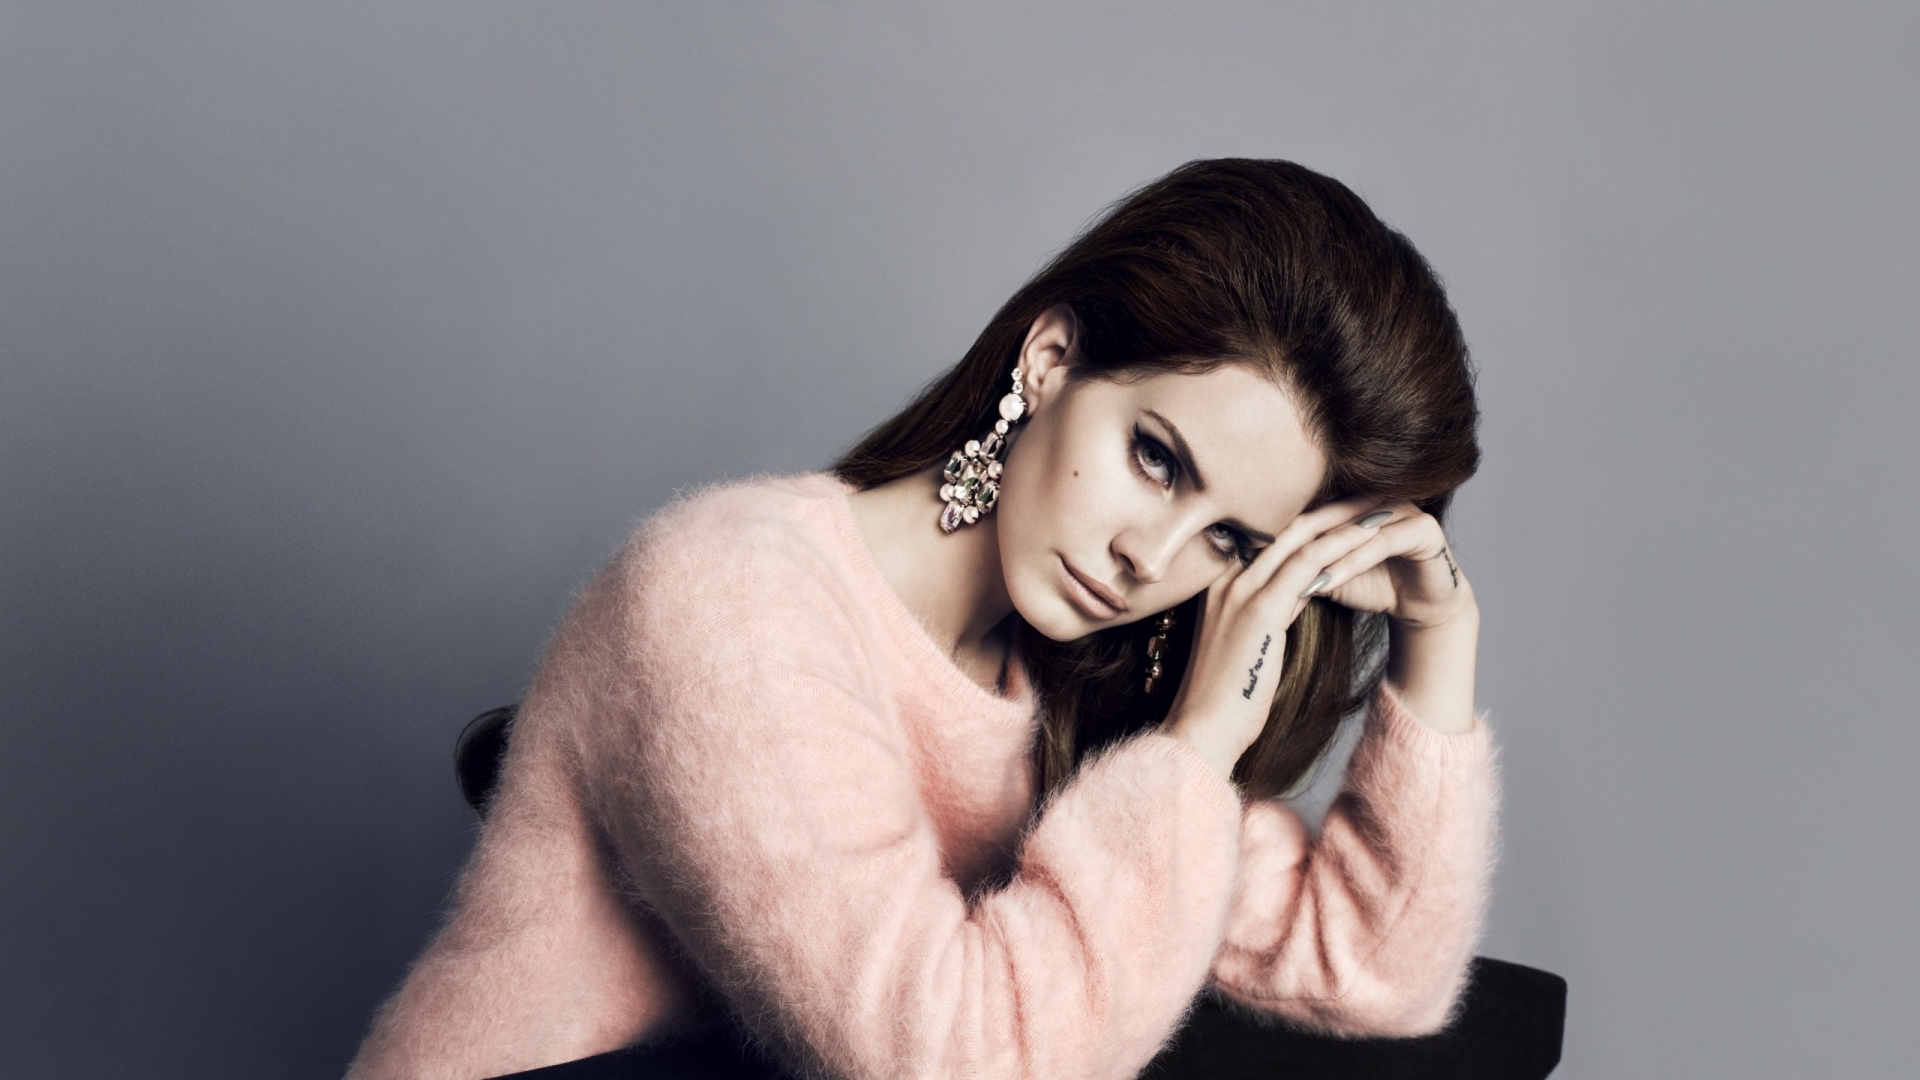 Beautiful Lana Del Rey for 1920 x 1080 HDTV 1080p resolution